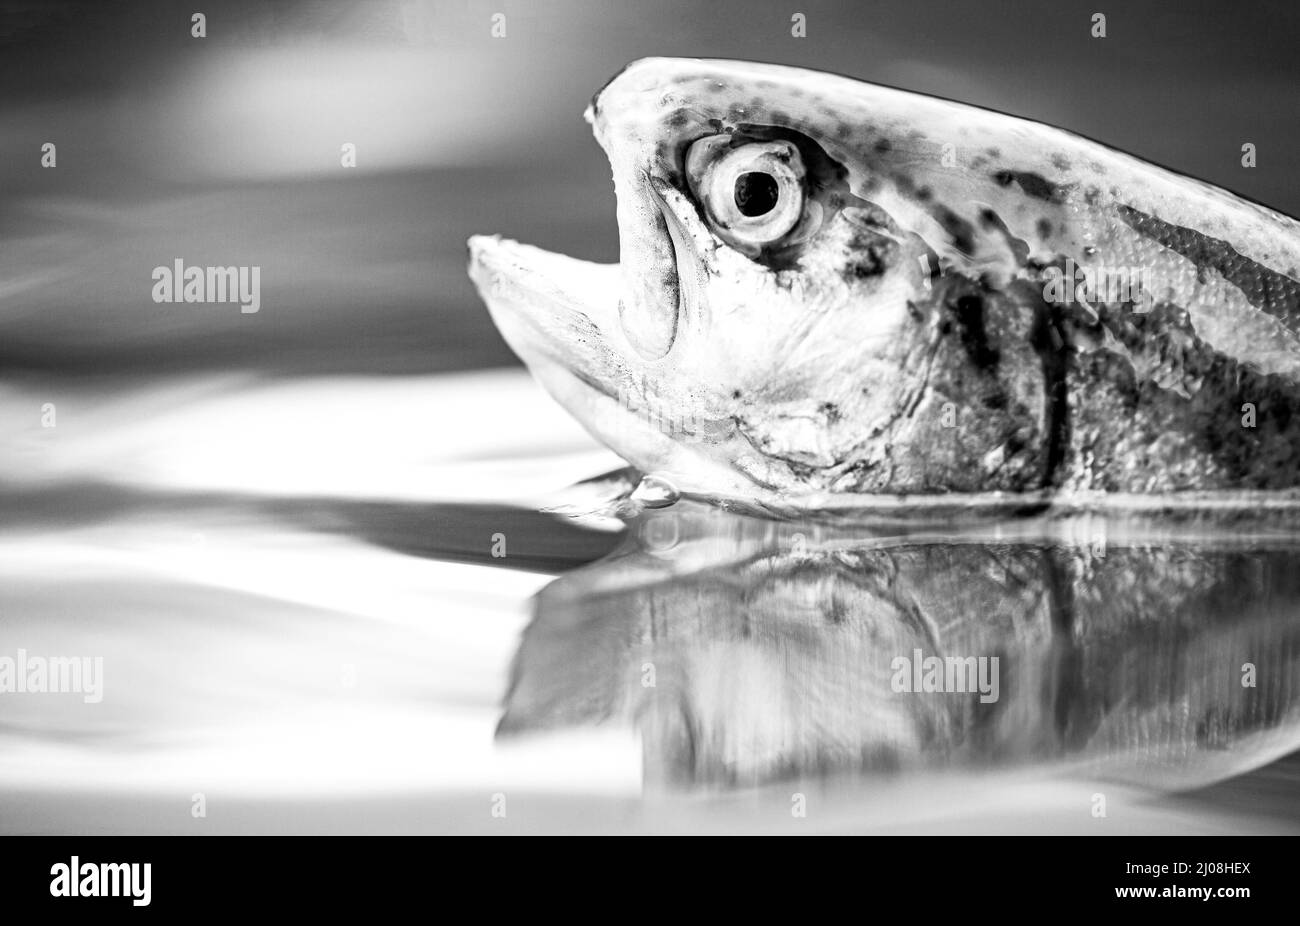 Aquaculture net Black and White Stock Photos & Images - Alamy